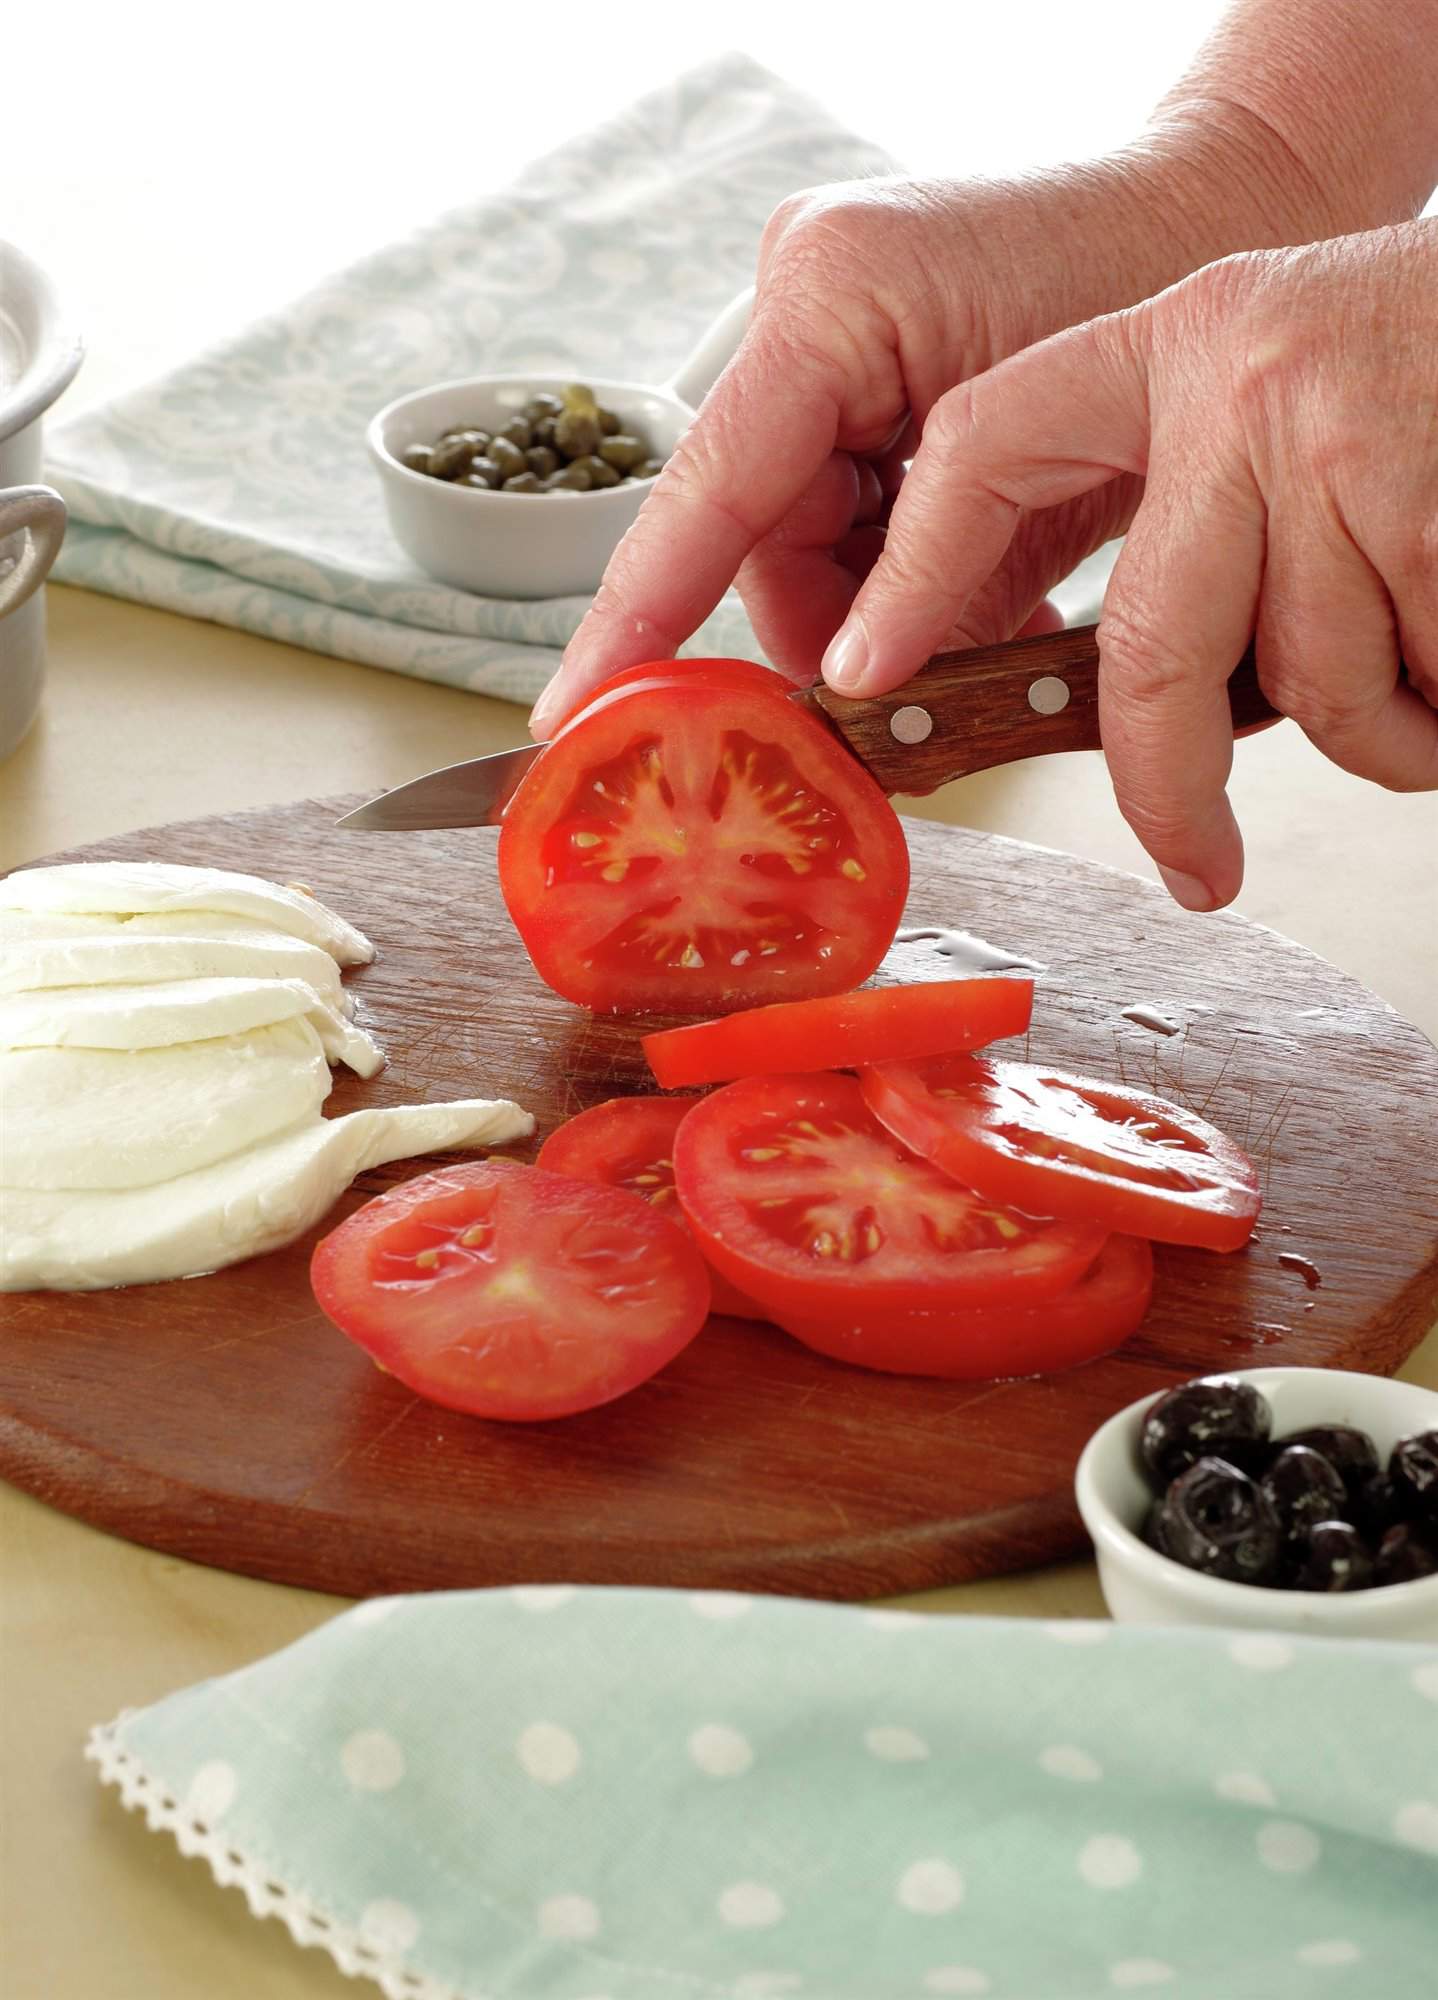 1. Corta el tomate